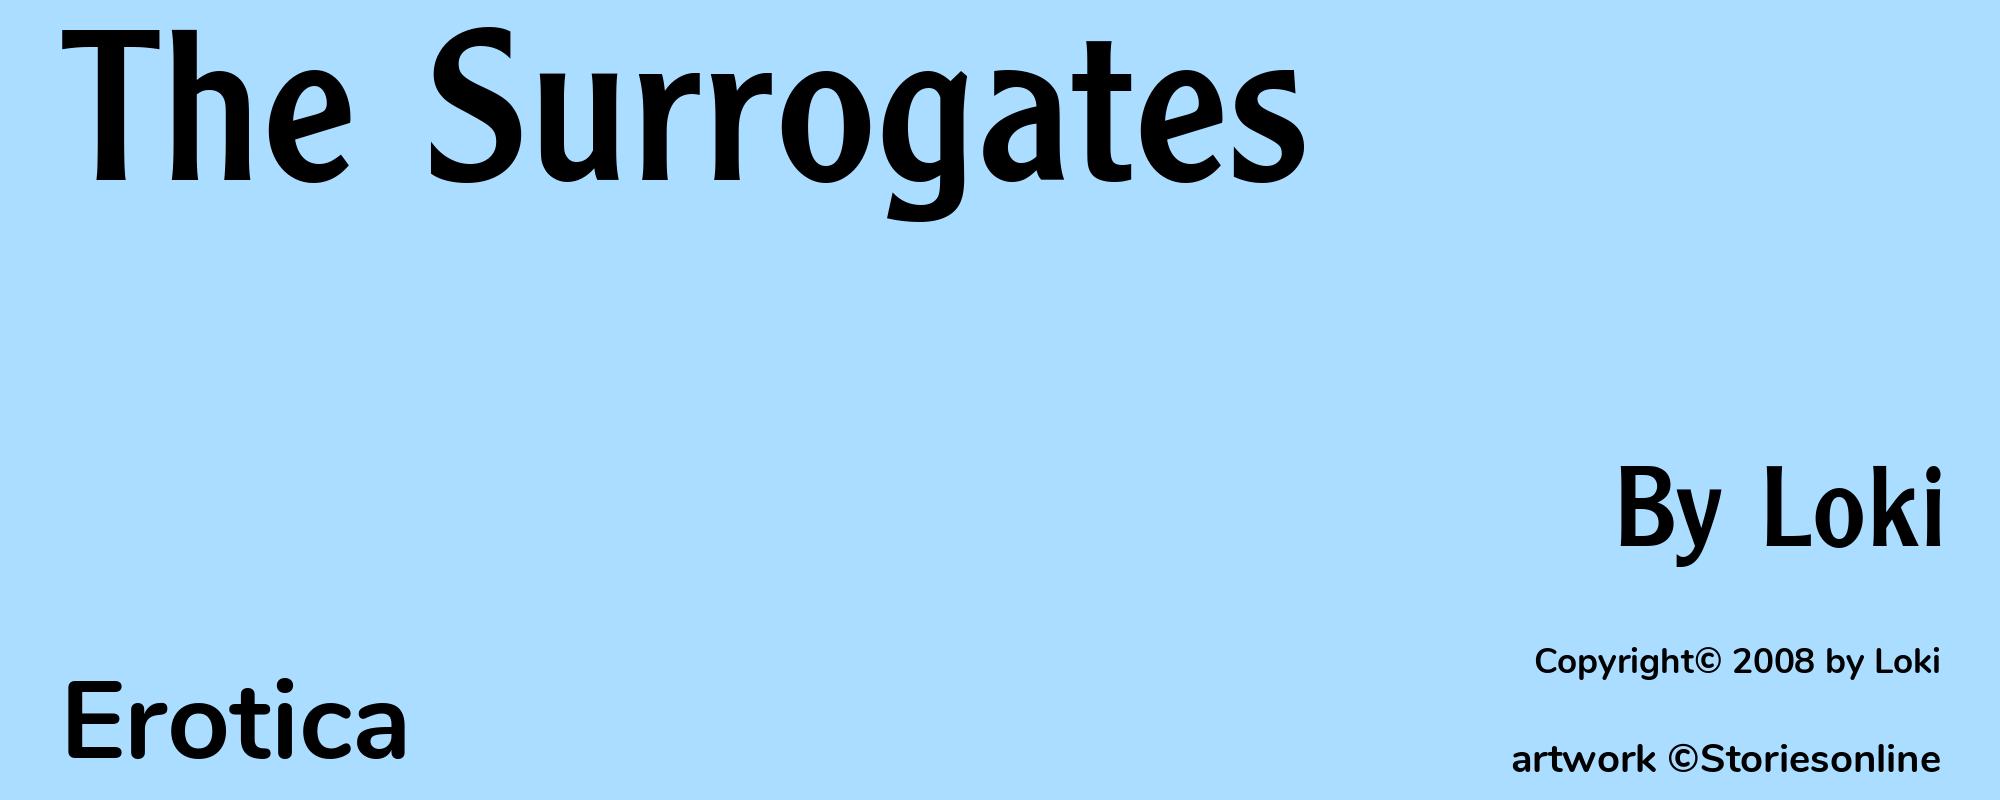 The Surrogates - Cover